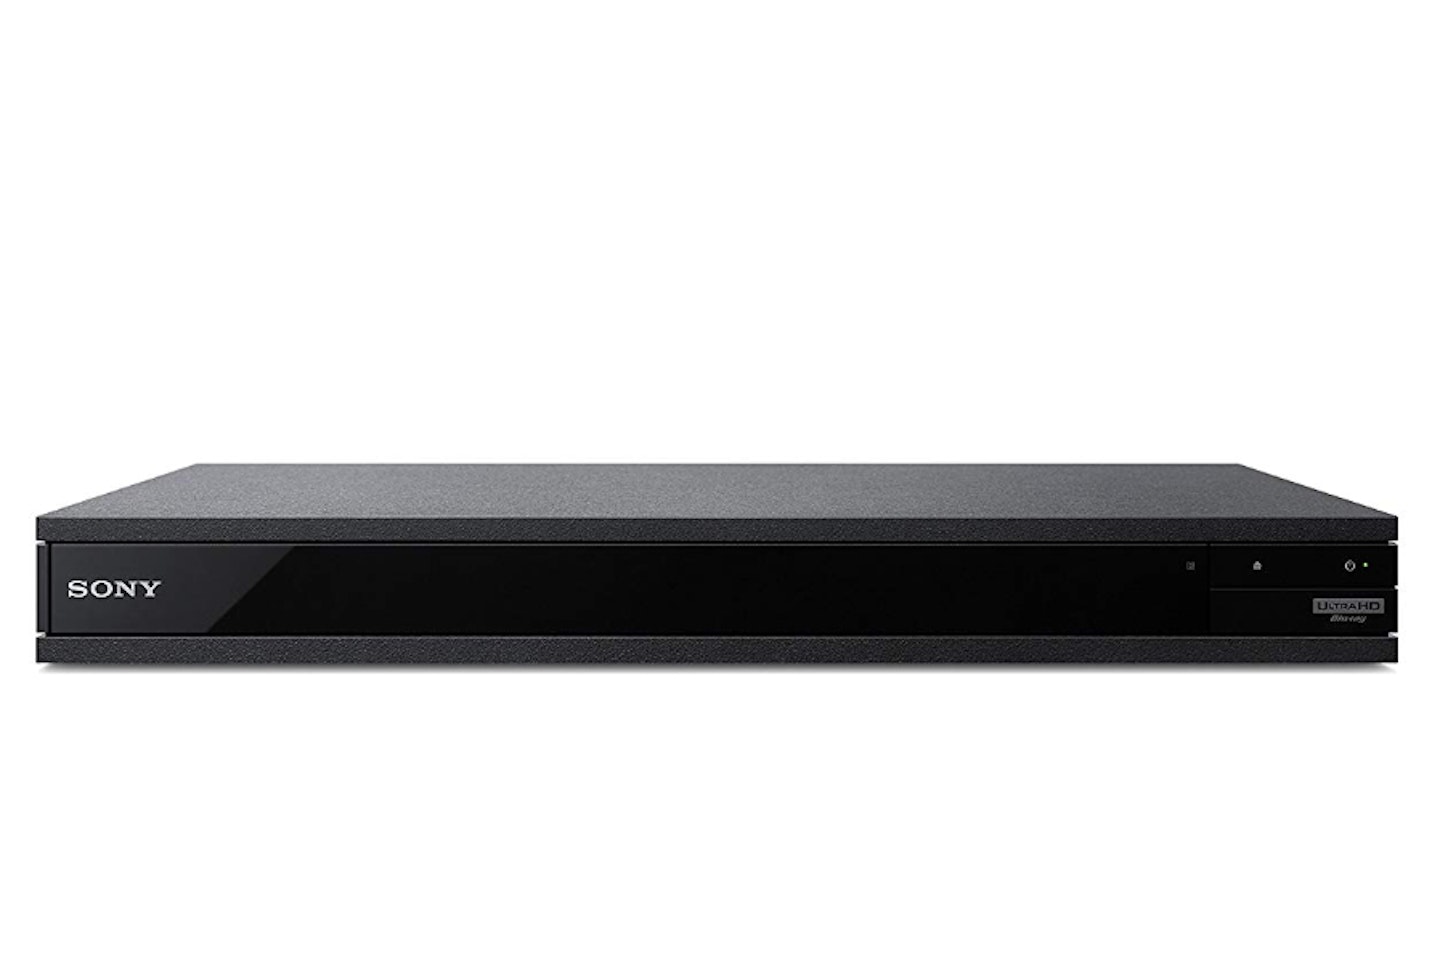 Sony UBP-X800 4K Ultra HD Blu-Ray Disc Player with High-Resolution Audio and Hi-Fi Quality – Black